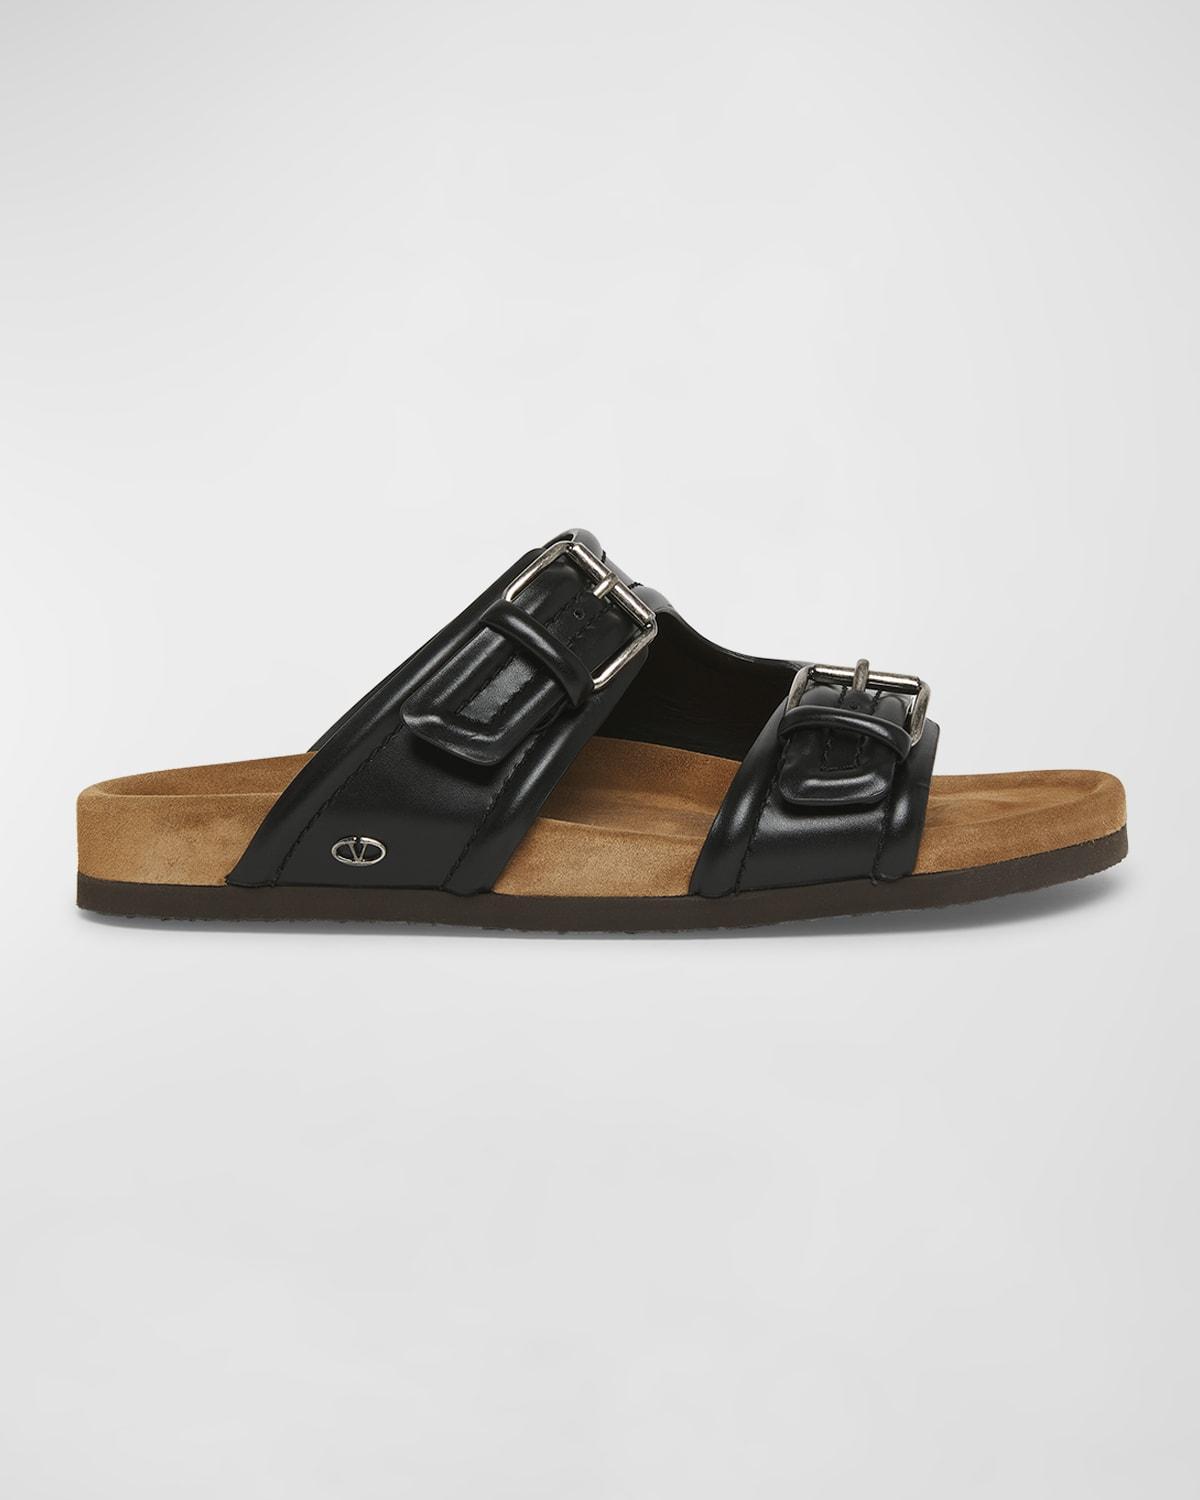 Men's Fussfriend Calfskin Leather Slide Sandals Product Image